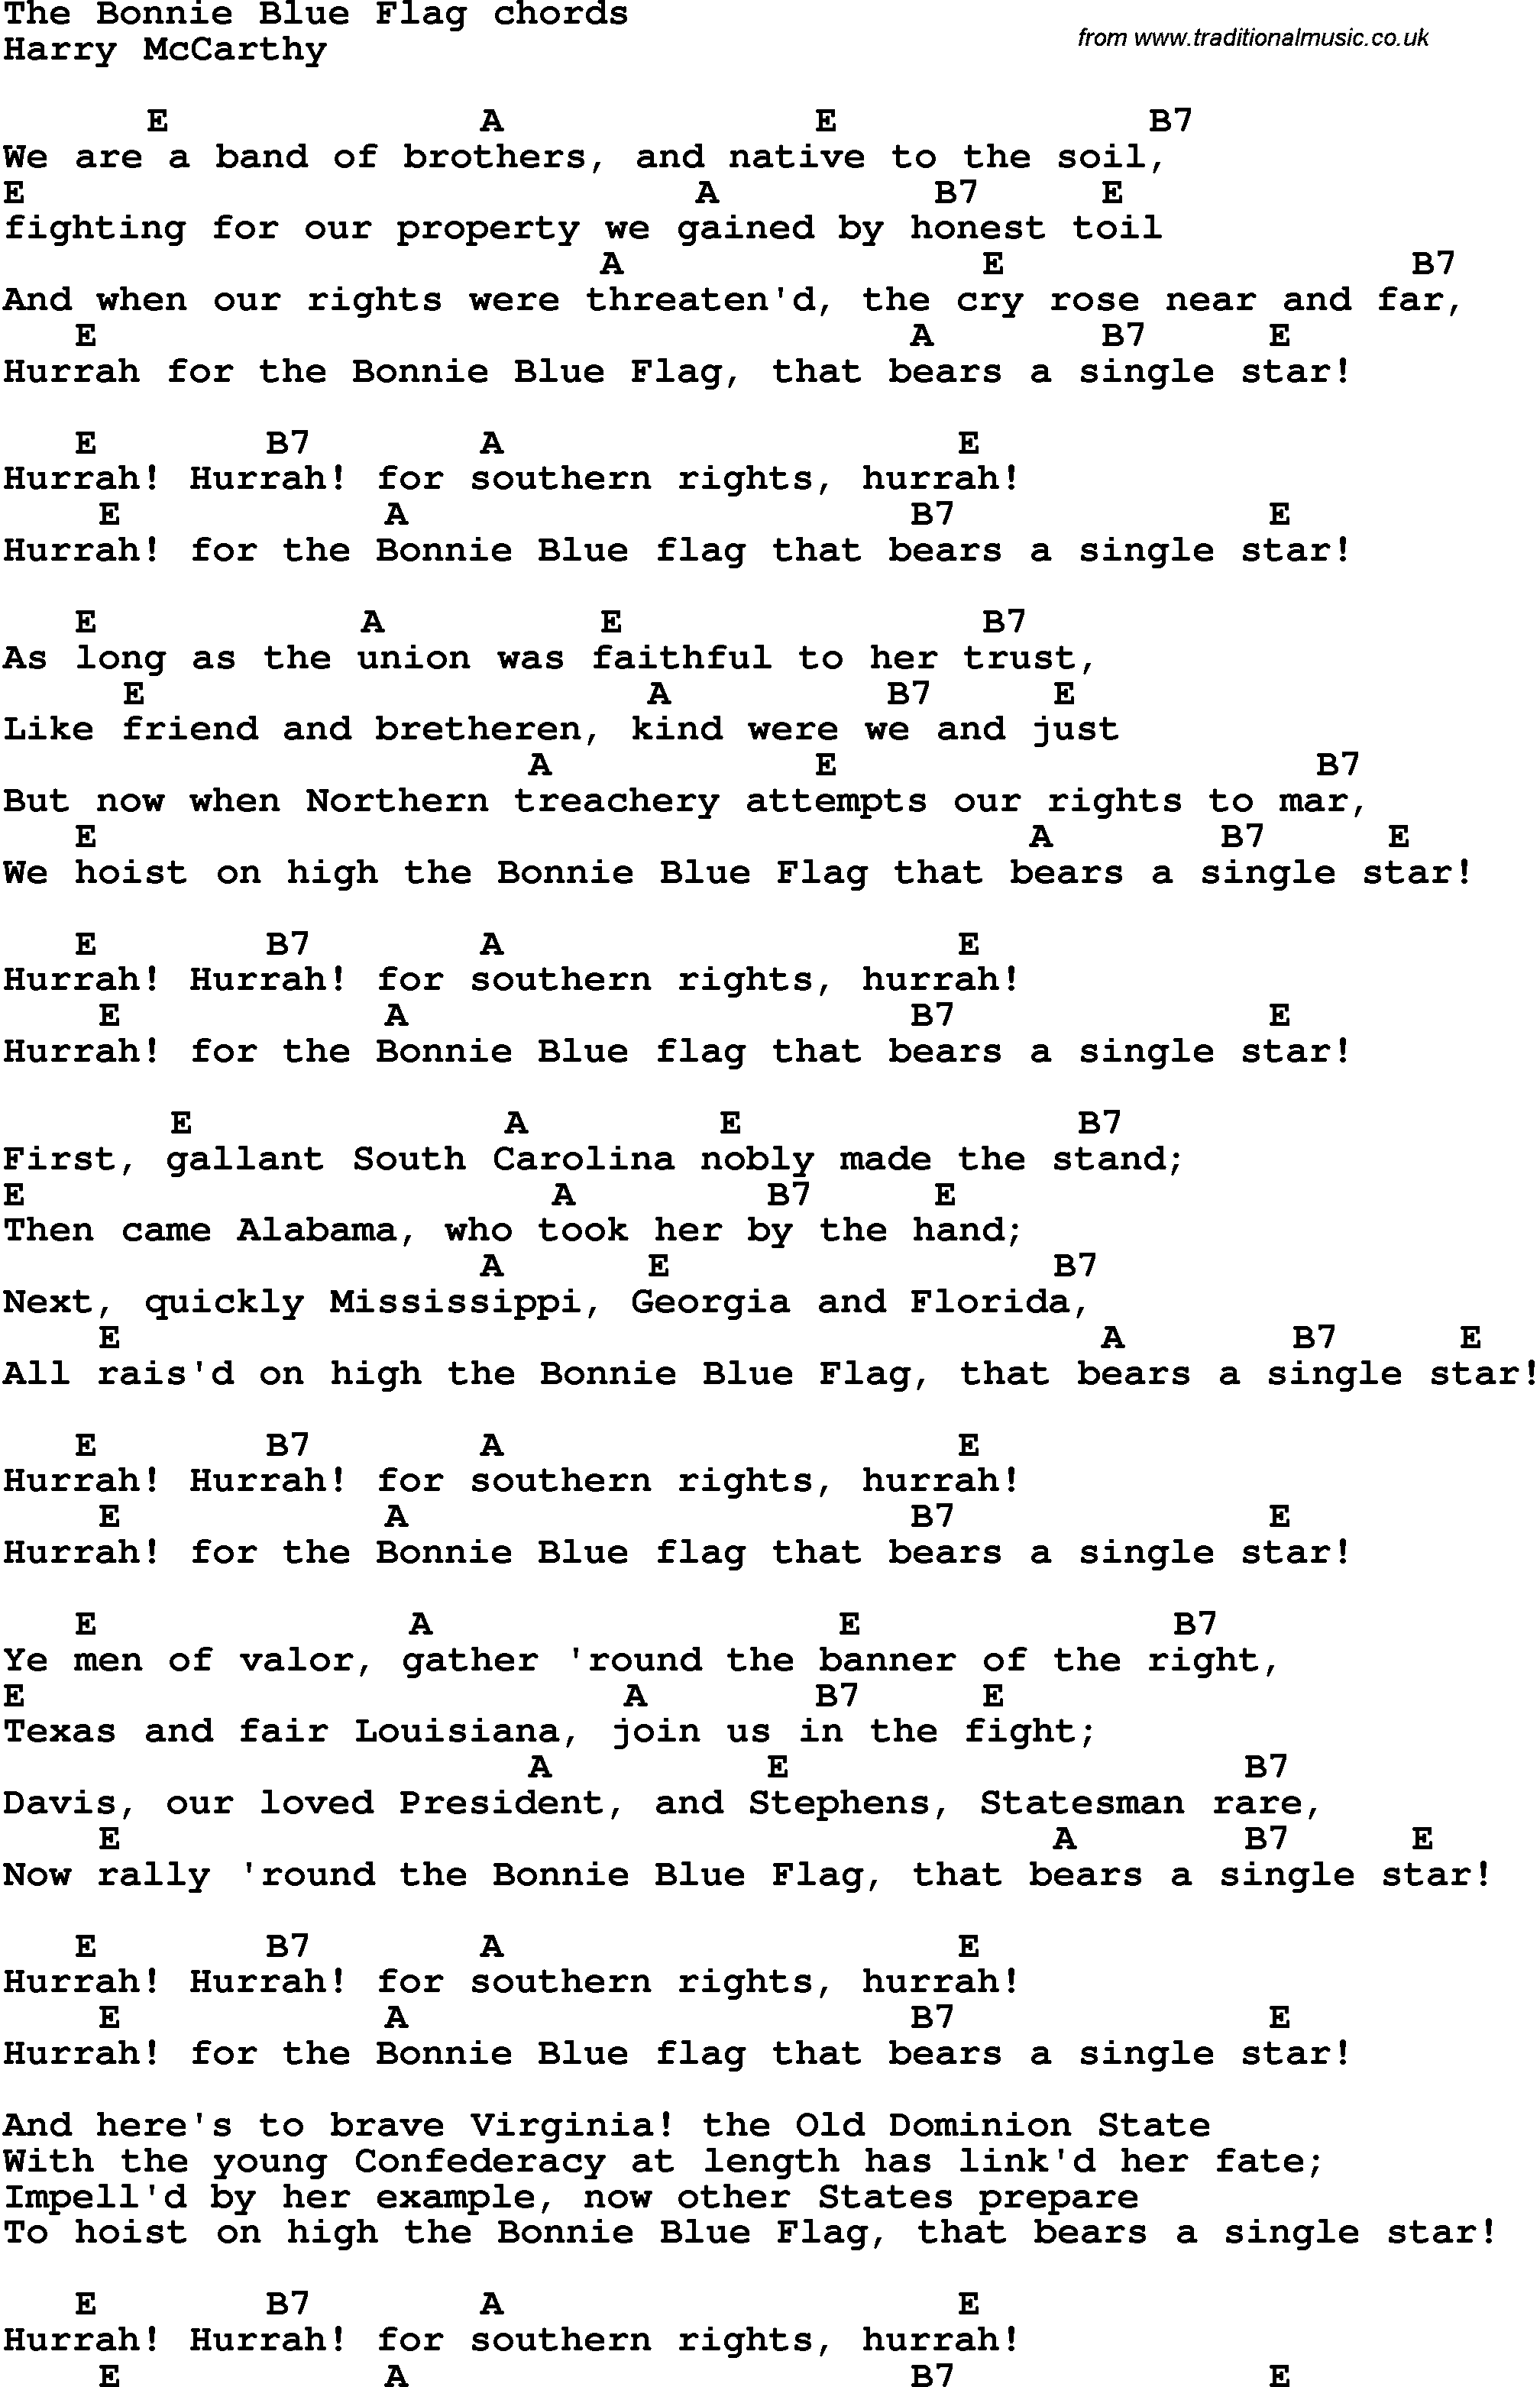 Song Lyrics with guitar chords for The Bonnie Blue Flag